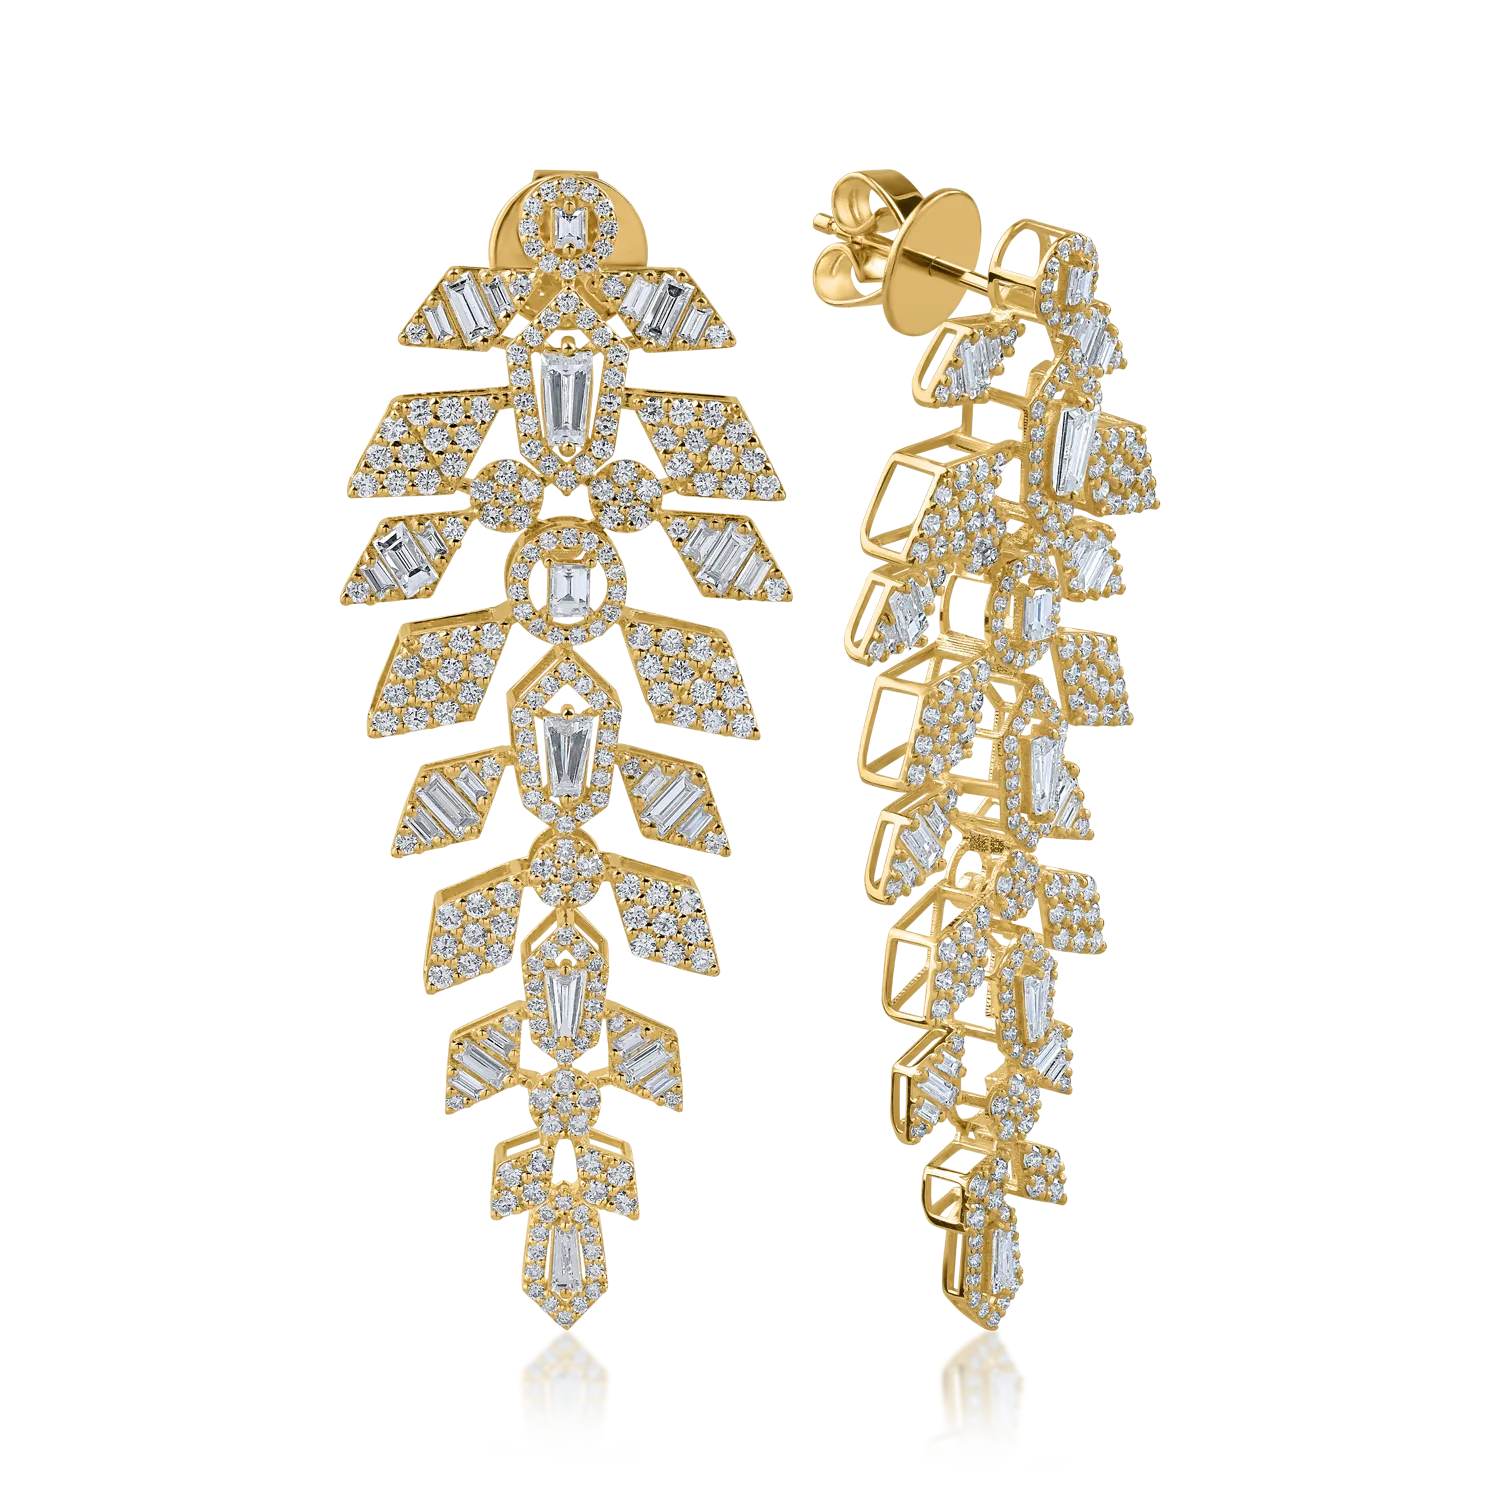 Yellow gold chandelier earrings with 3.38ct diamonds